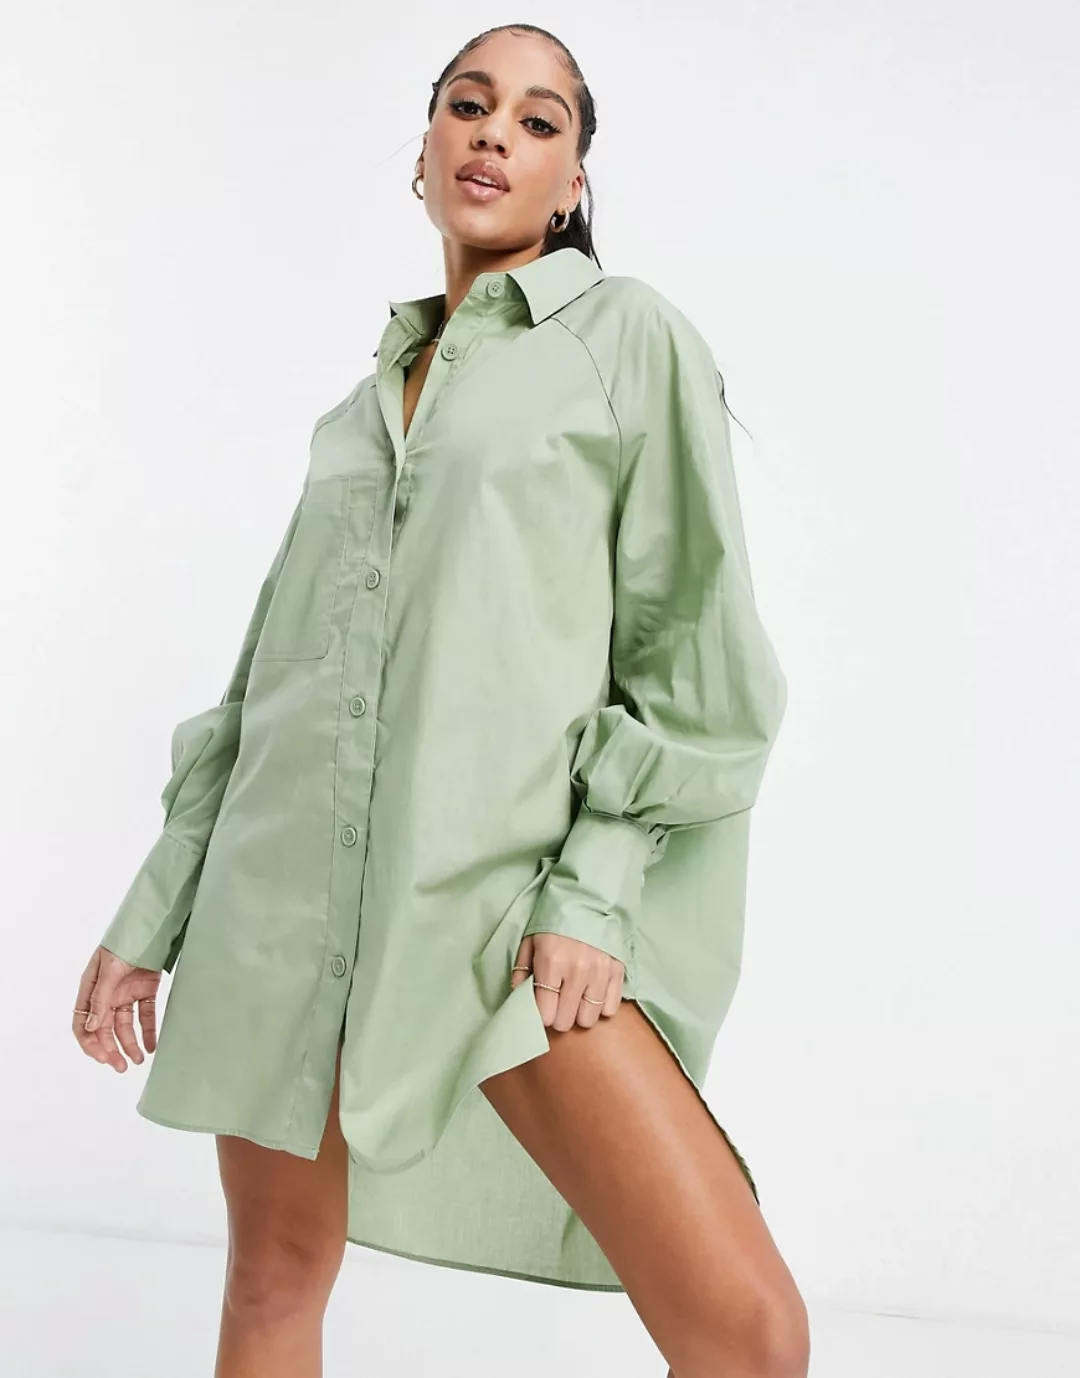 Threadbare – Oversized Hemdkleid mit Ballonärmeln in sanftem Khaki-Grün günstig online kaufen